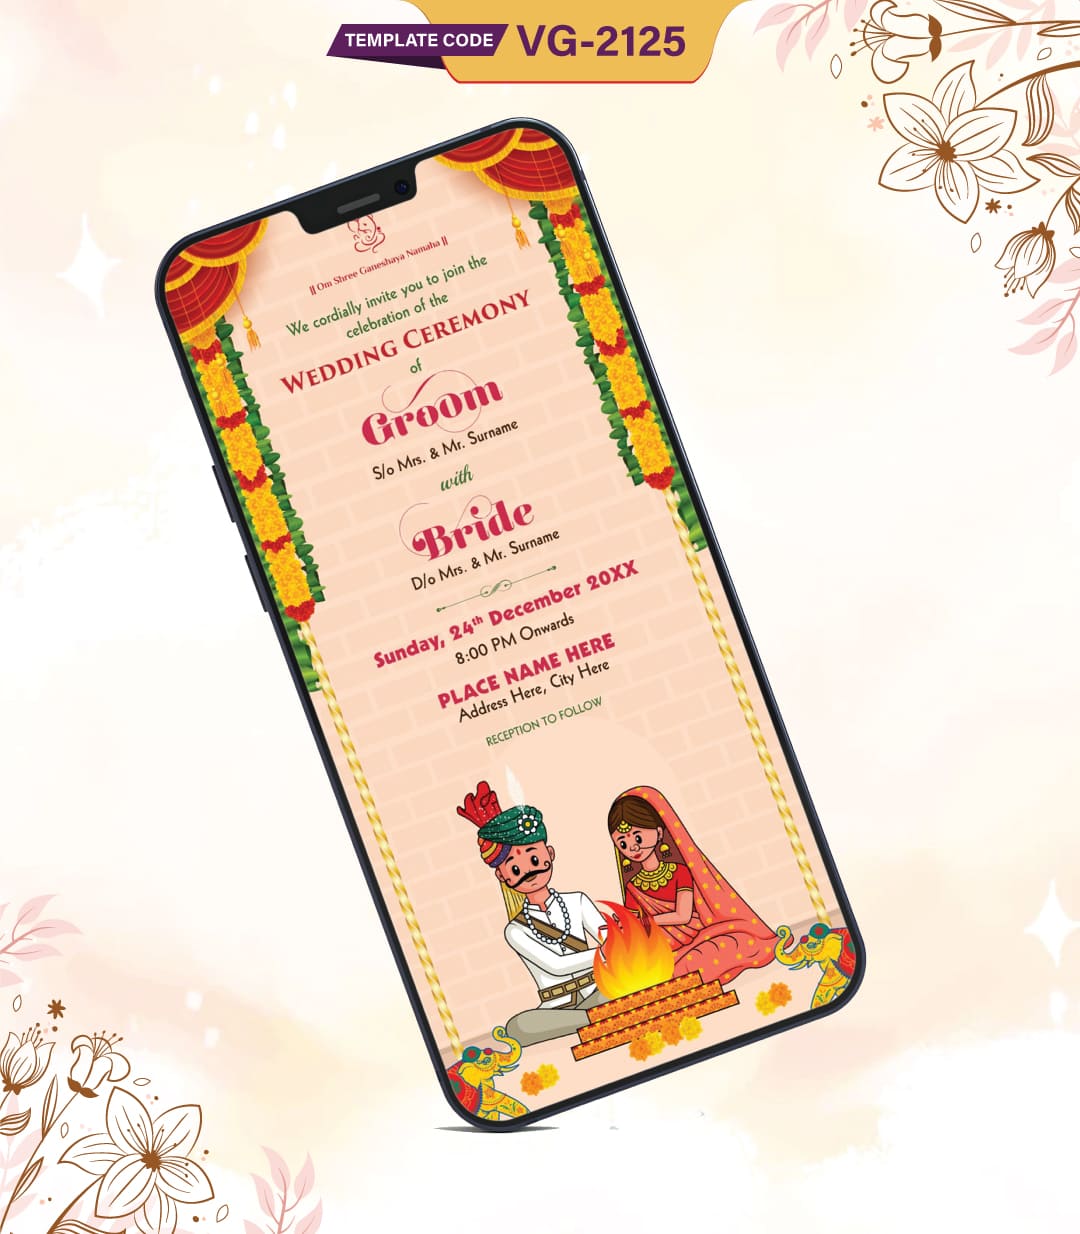 Gujarati Wedding Invitation Card - Indian Wedding Invitation eCard